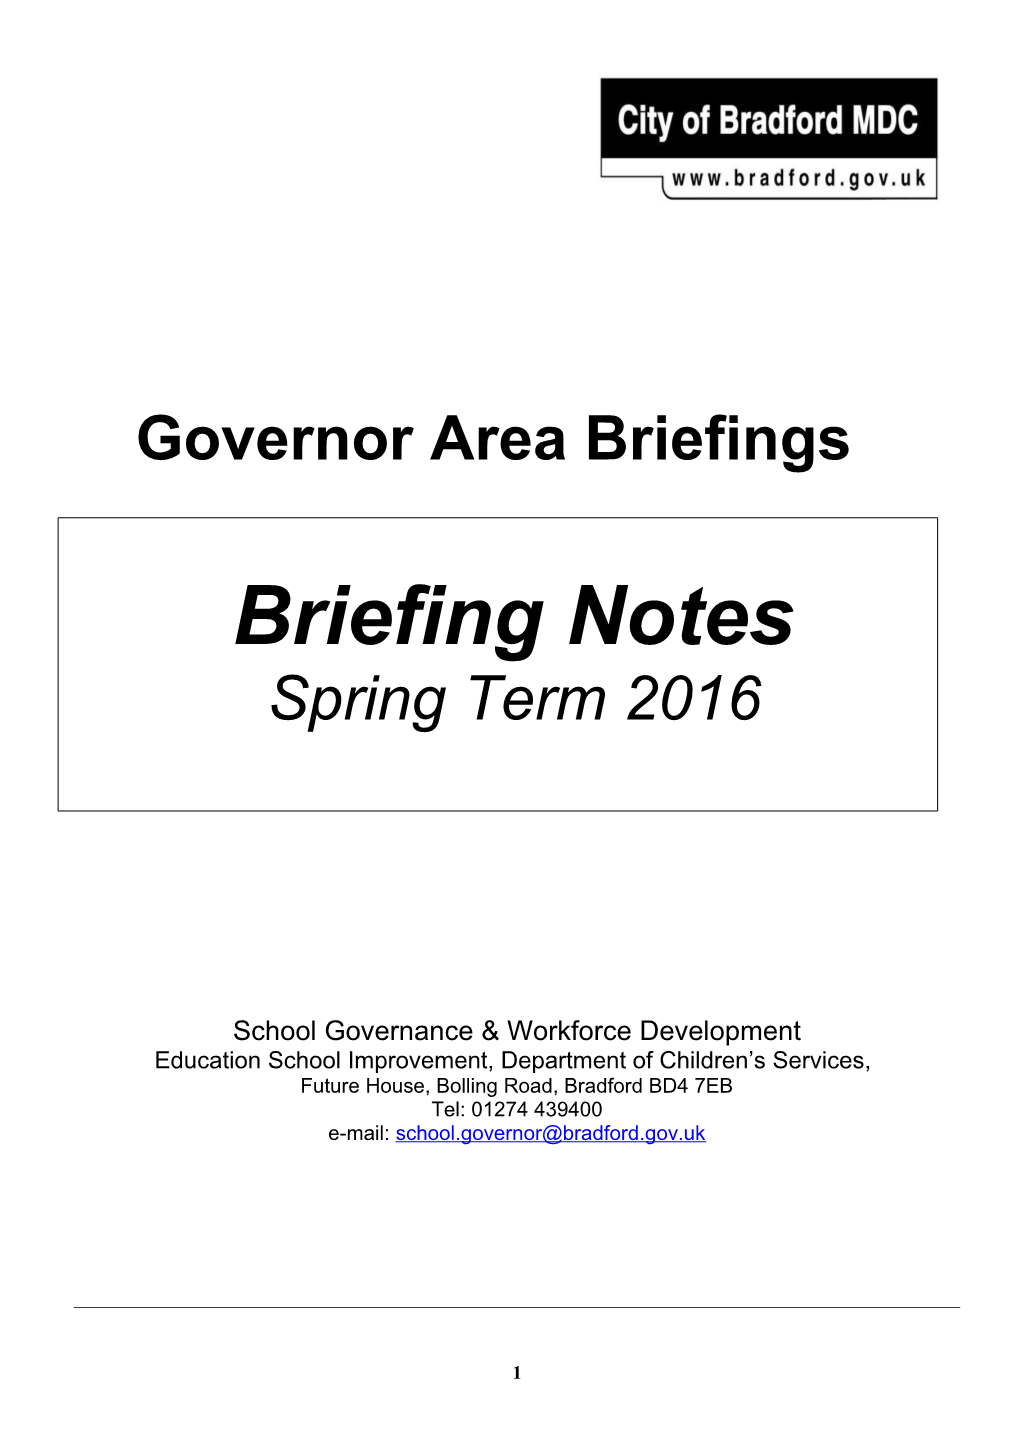 Briefing Notes - Spring Term 2000